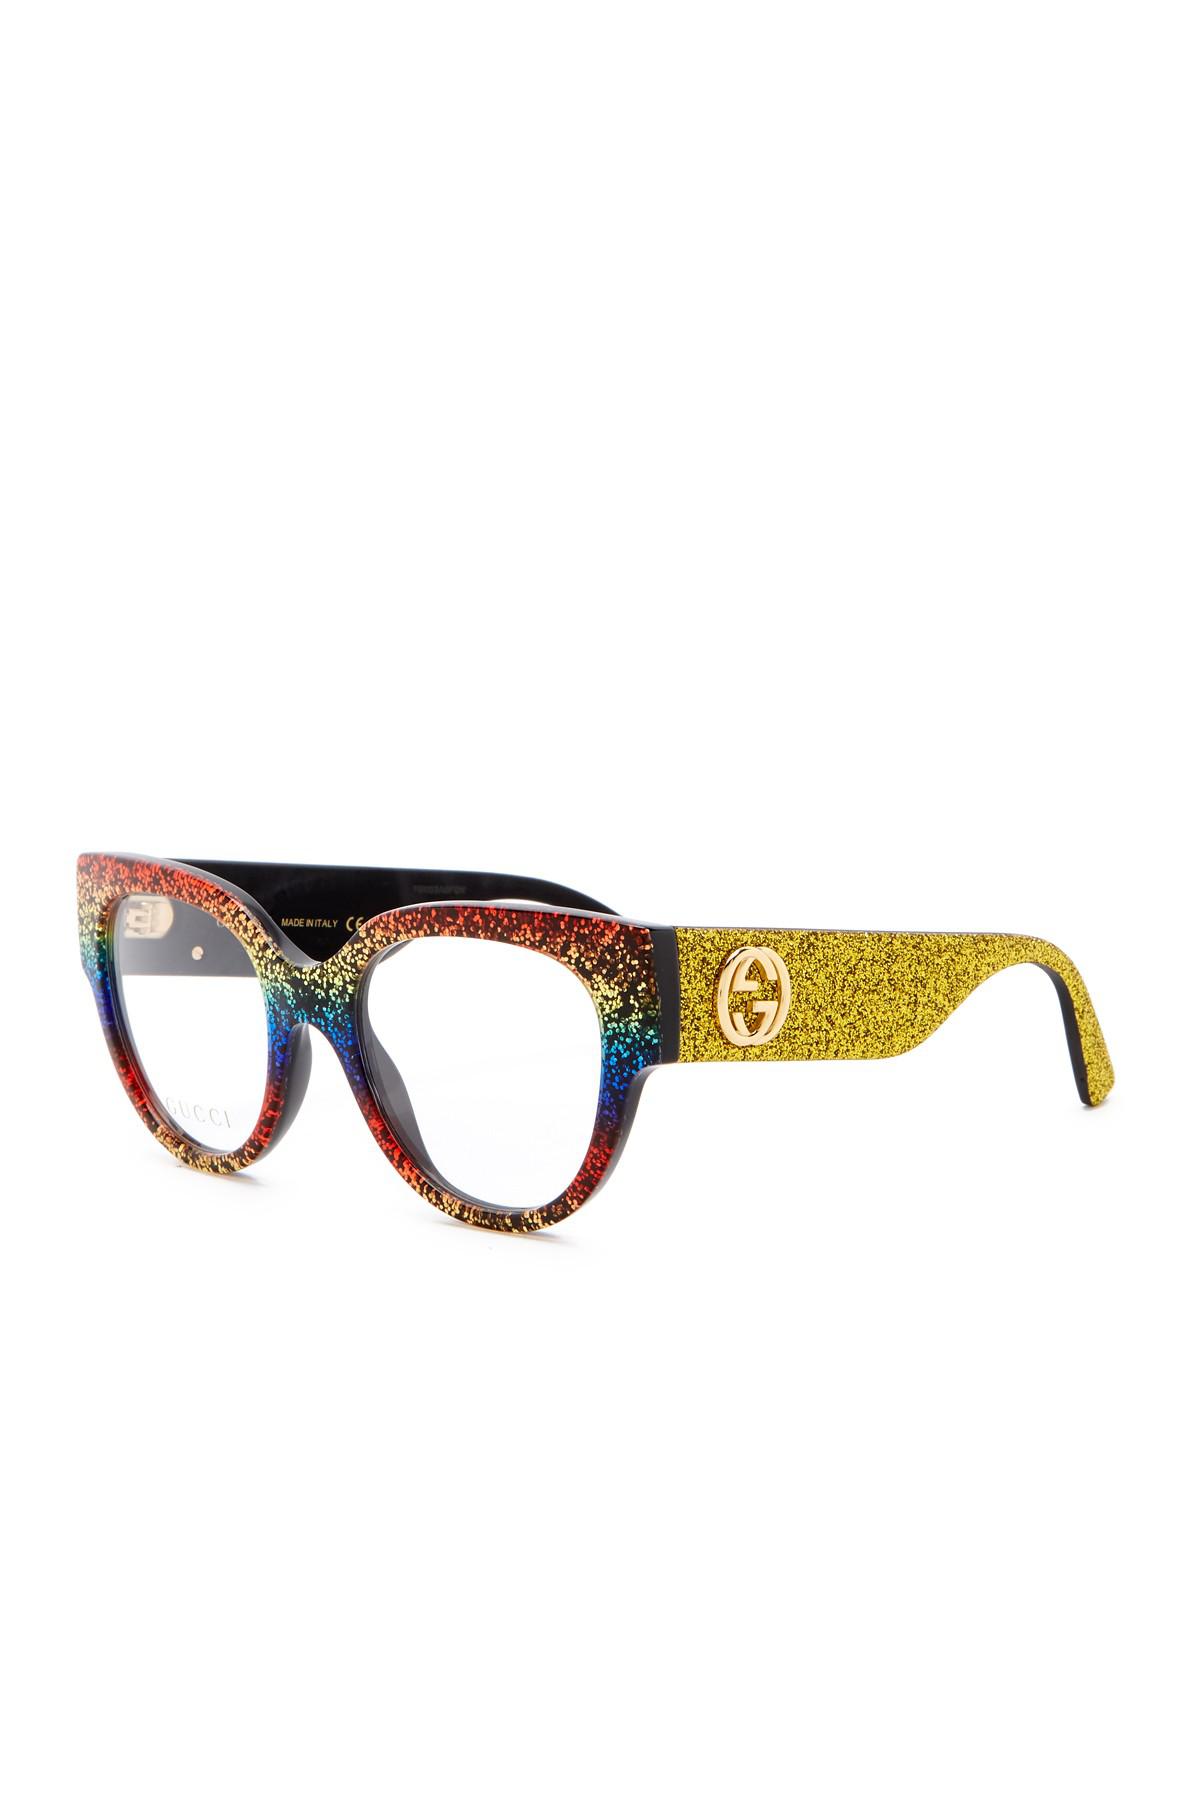 Gucci 50mm Rainbow Glitter Square Optical Frames | Lyst